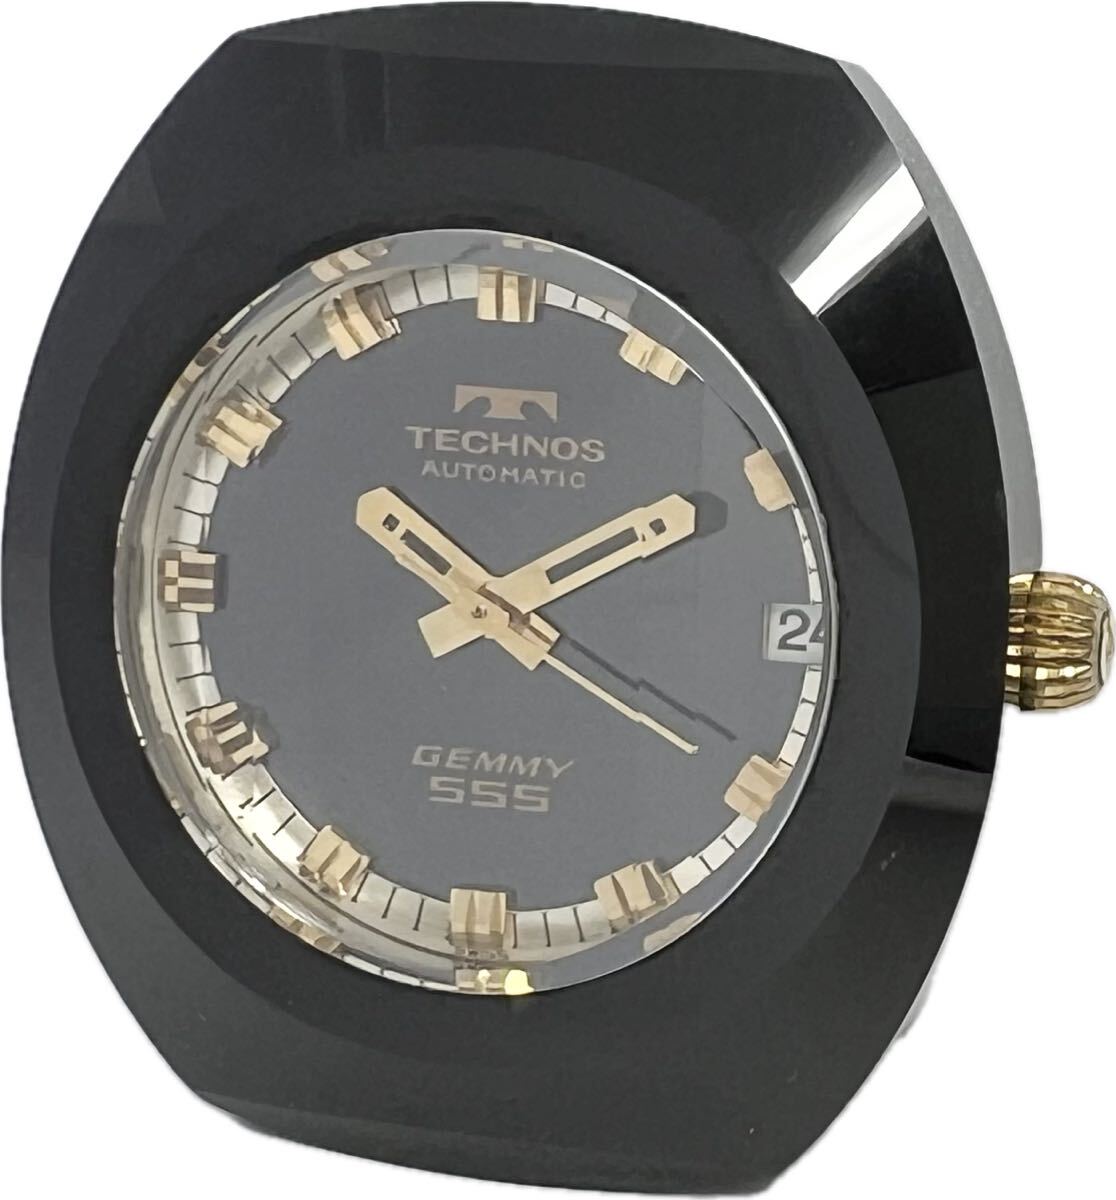 1 jpy ~ H rare Neo sapphire case TECHNOS Tecnos jemi-SSS men's self-winding watch Date cut glass antique clock 62244396